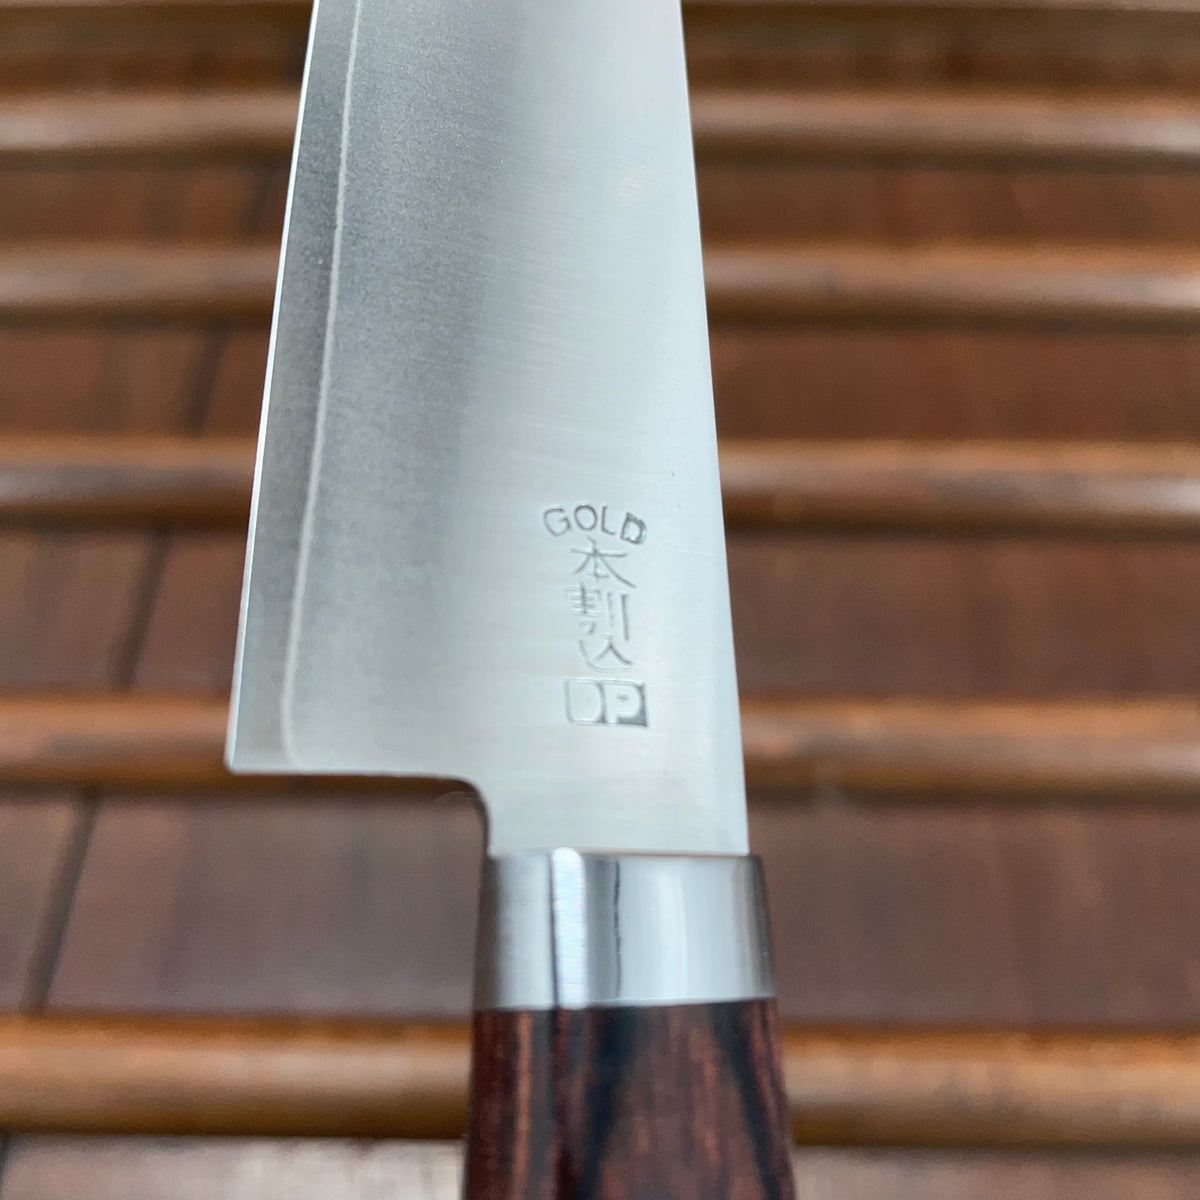 Hitohira Imojiya MZ 135mm Kids Knife VG-1 Imitation Mahogany Handle –  Bernal Cutlery